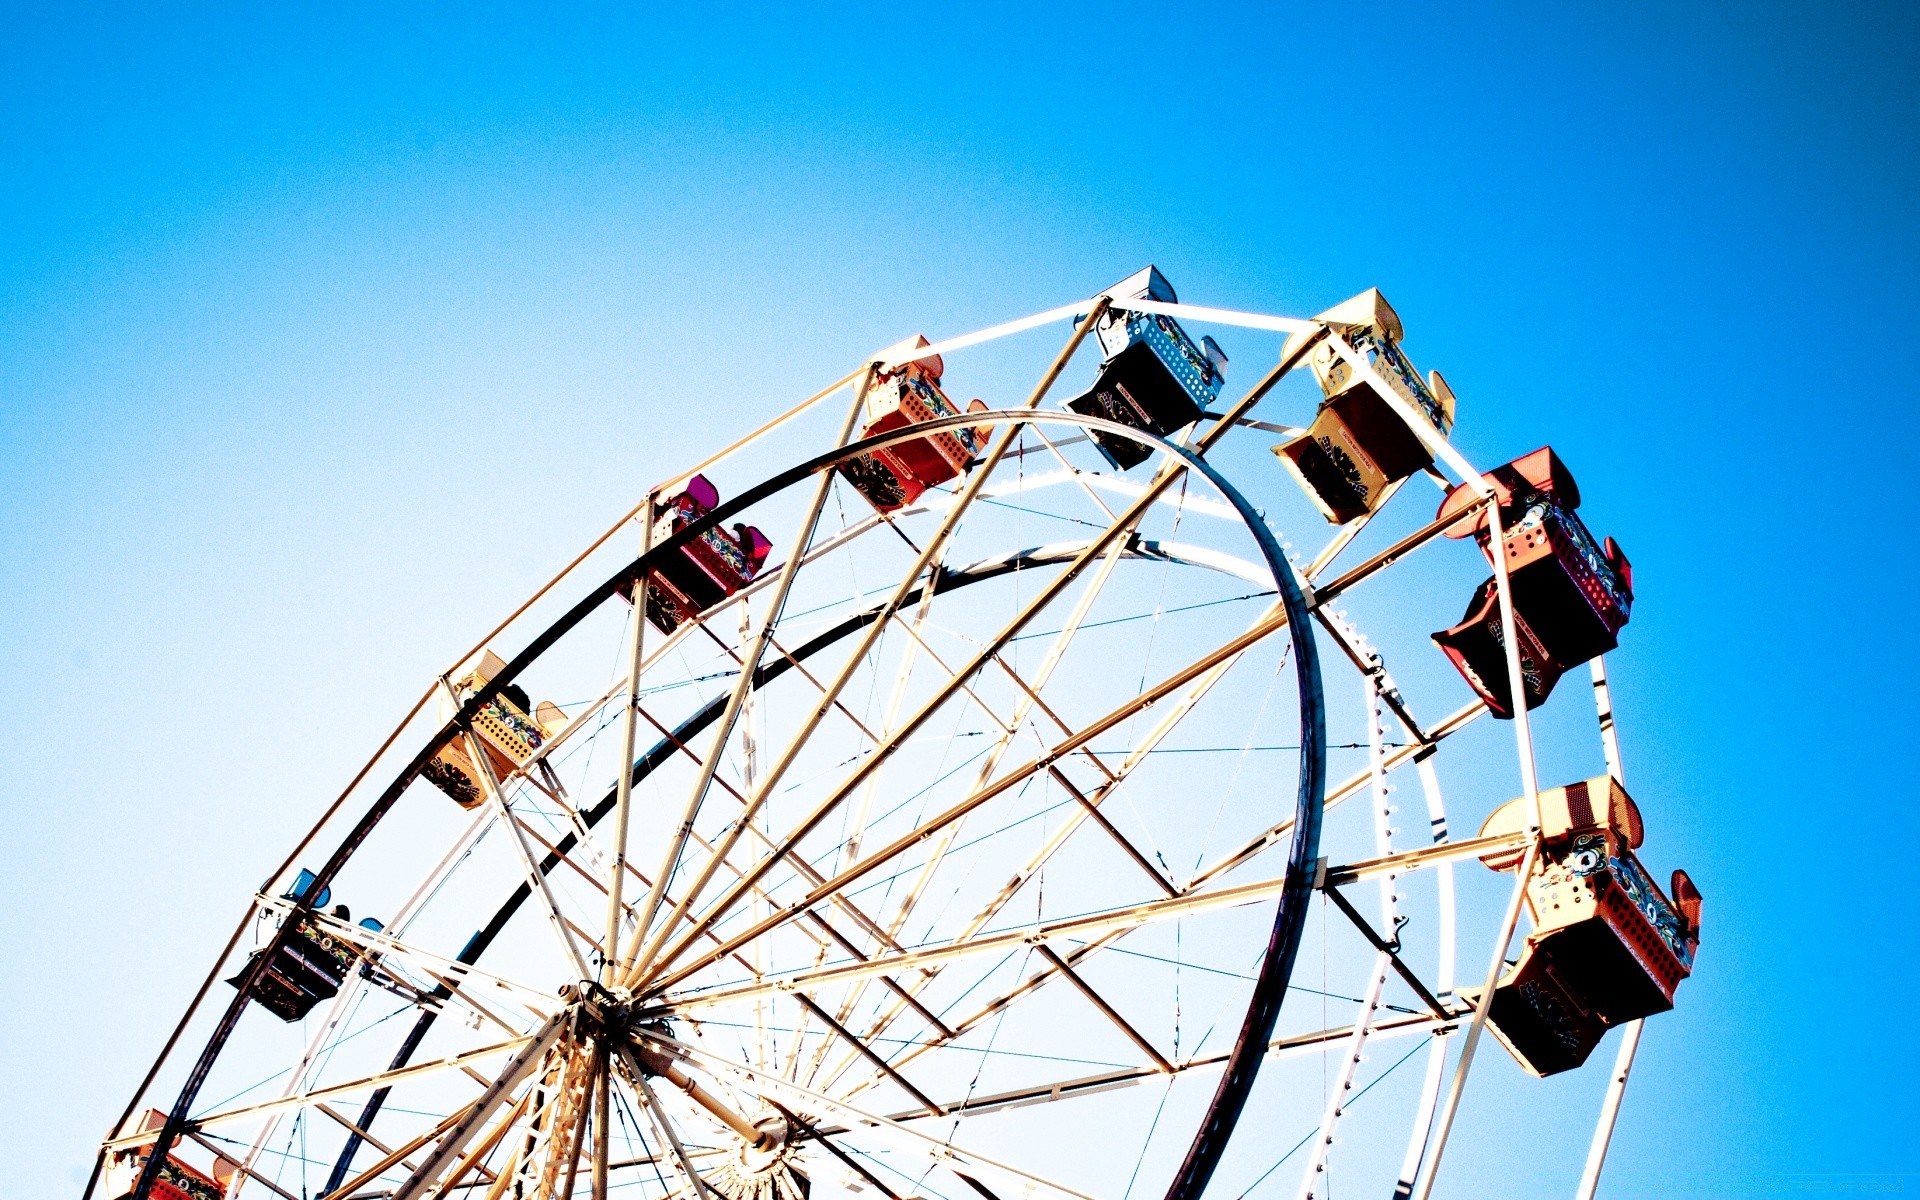 america carnival carousel entertainment ferris wheel festival exhilaration fairground fun circus wheel sky height leisure spin turning enjoyment high thrill